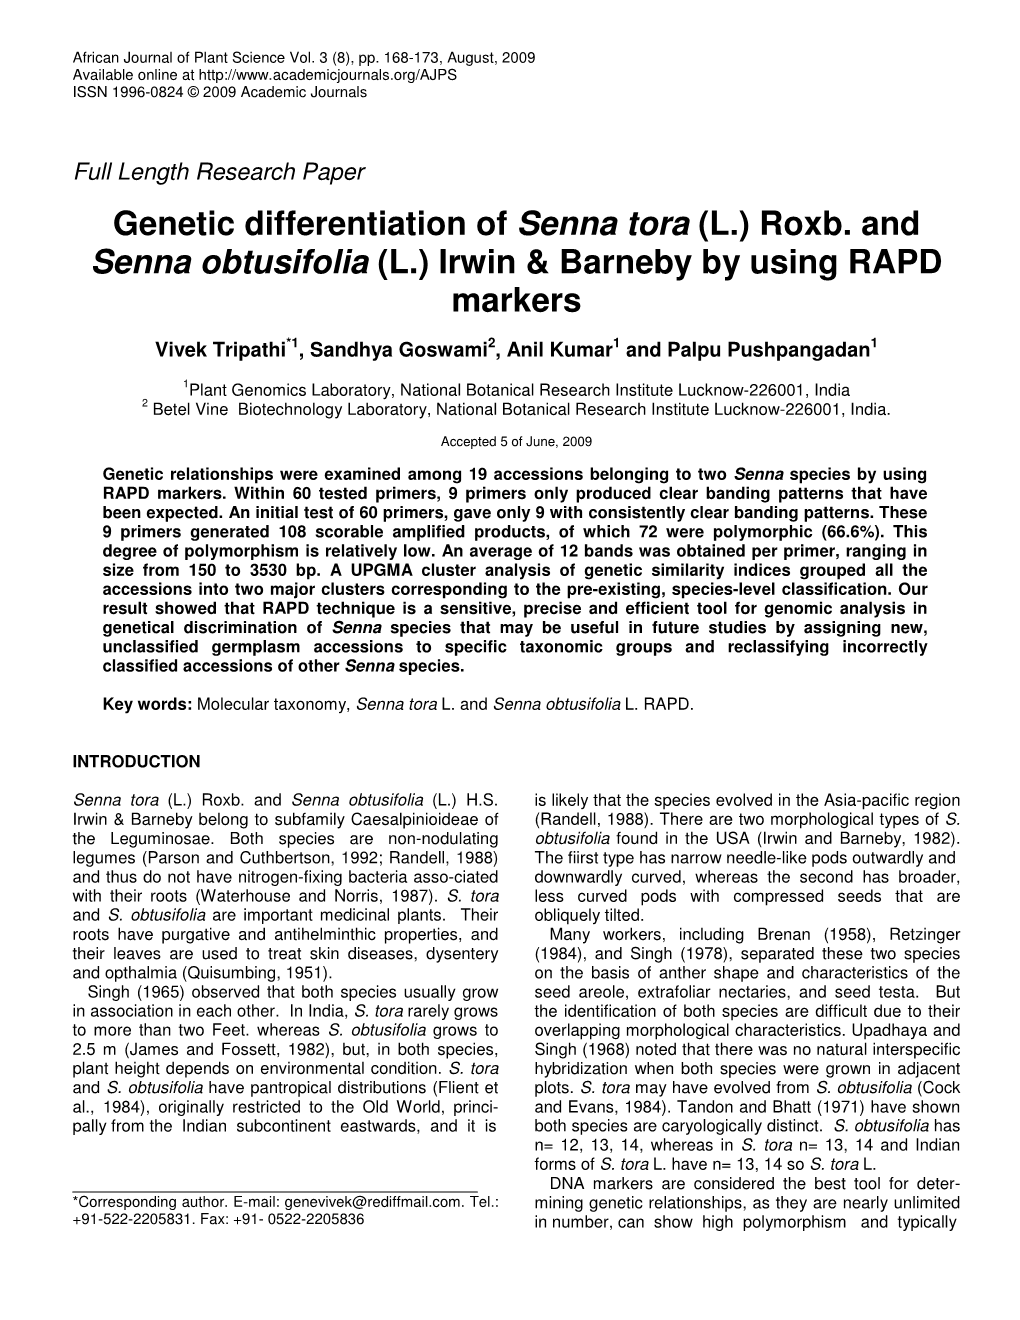 Roxb. and Senna Obtusifolia (L.) Irwin & Barneby by Using RAPD Markers